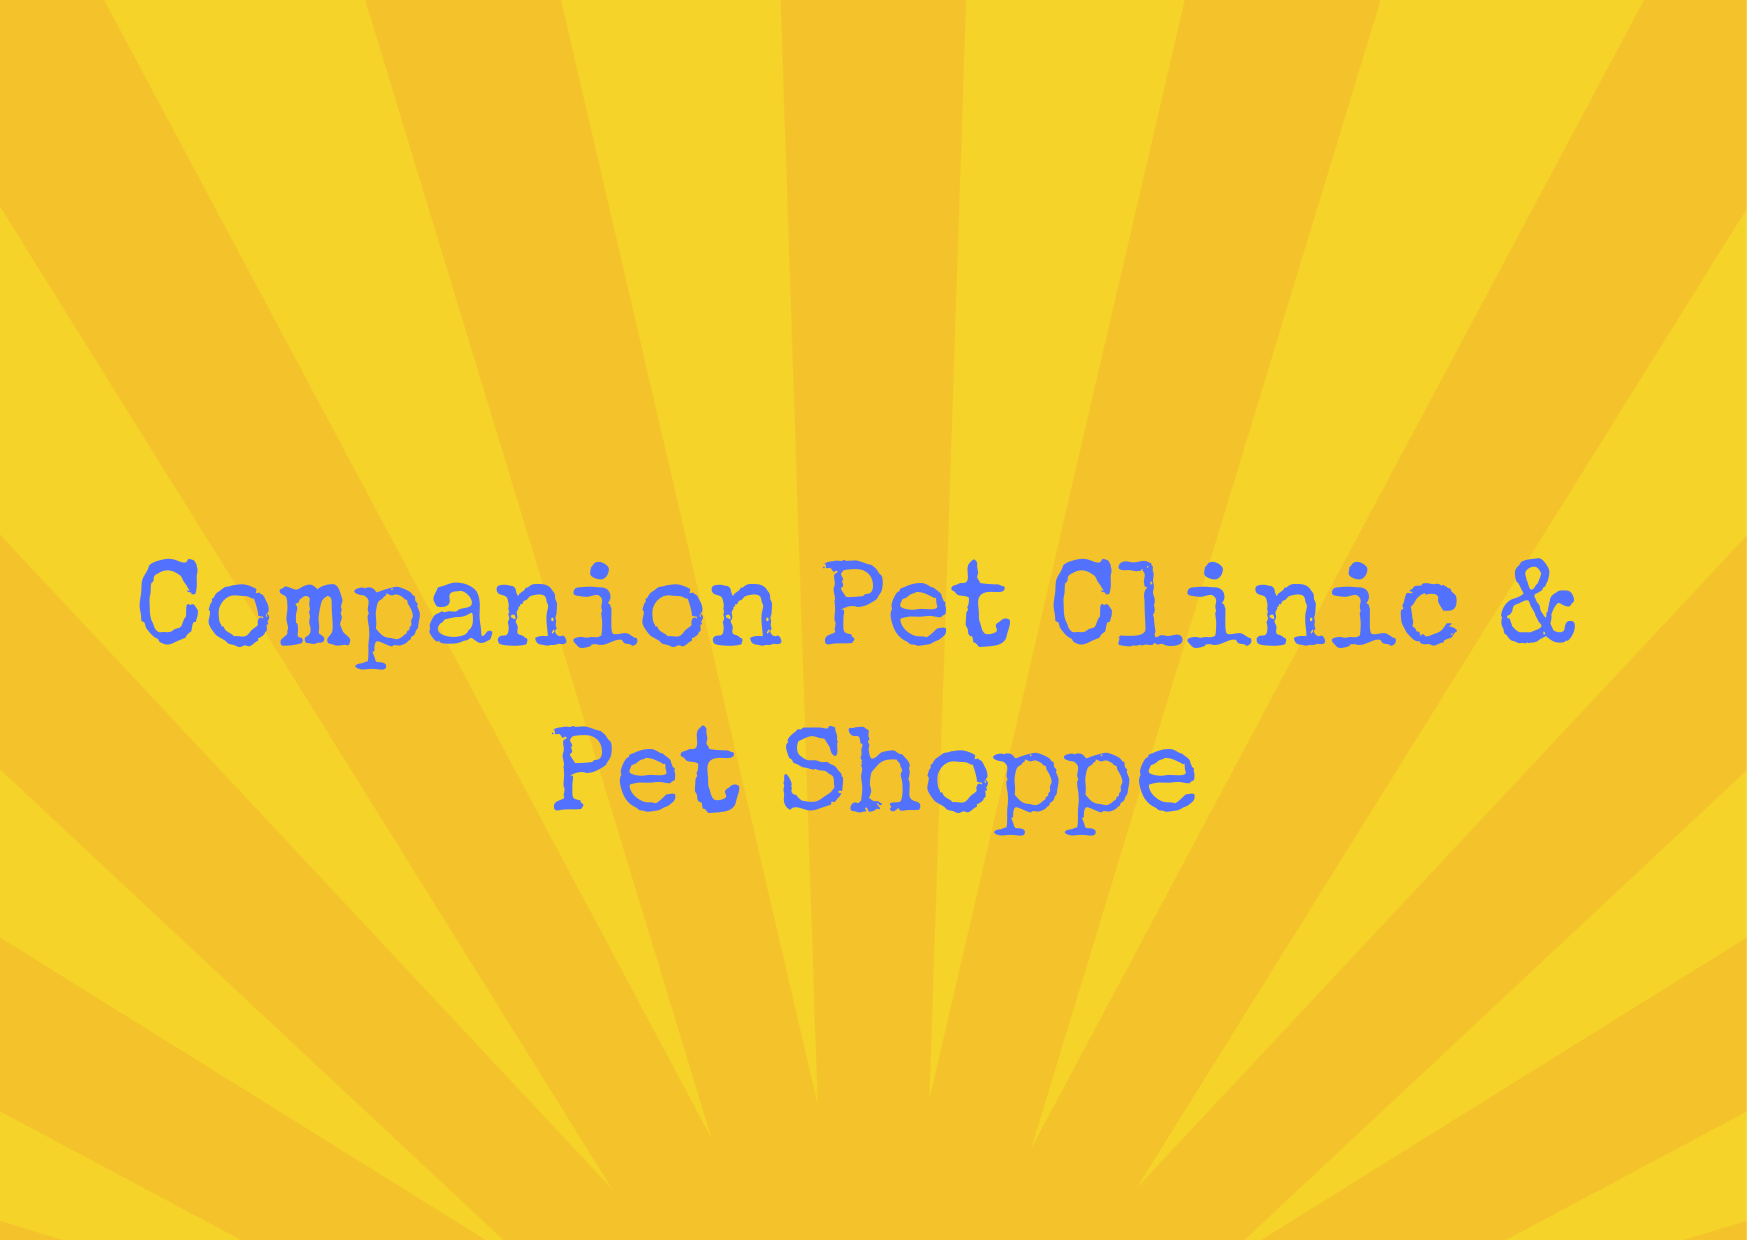 Companion Pet Clinic & Pet Shoppe 